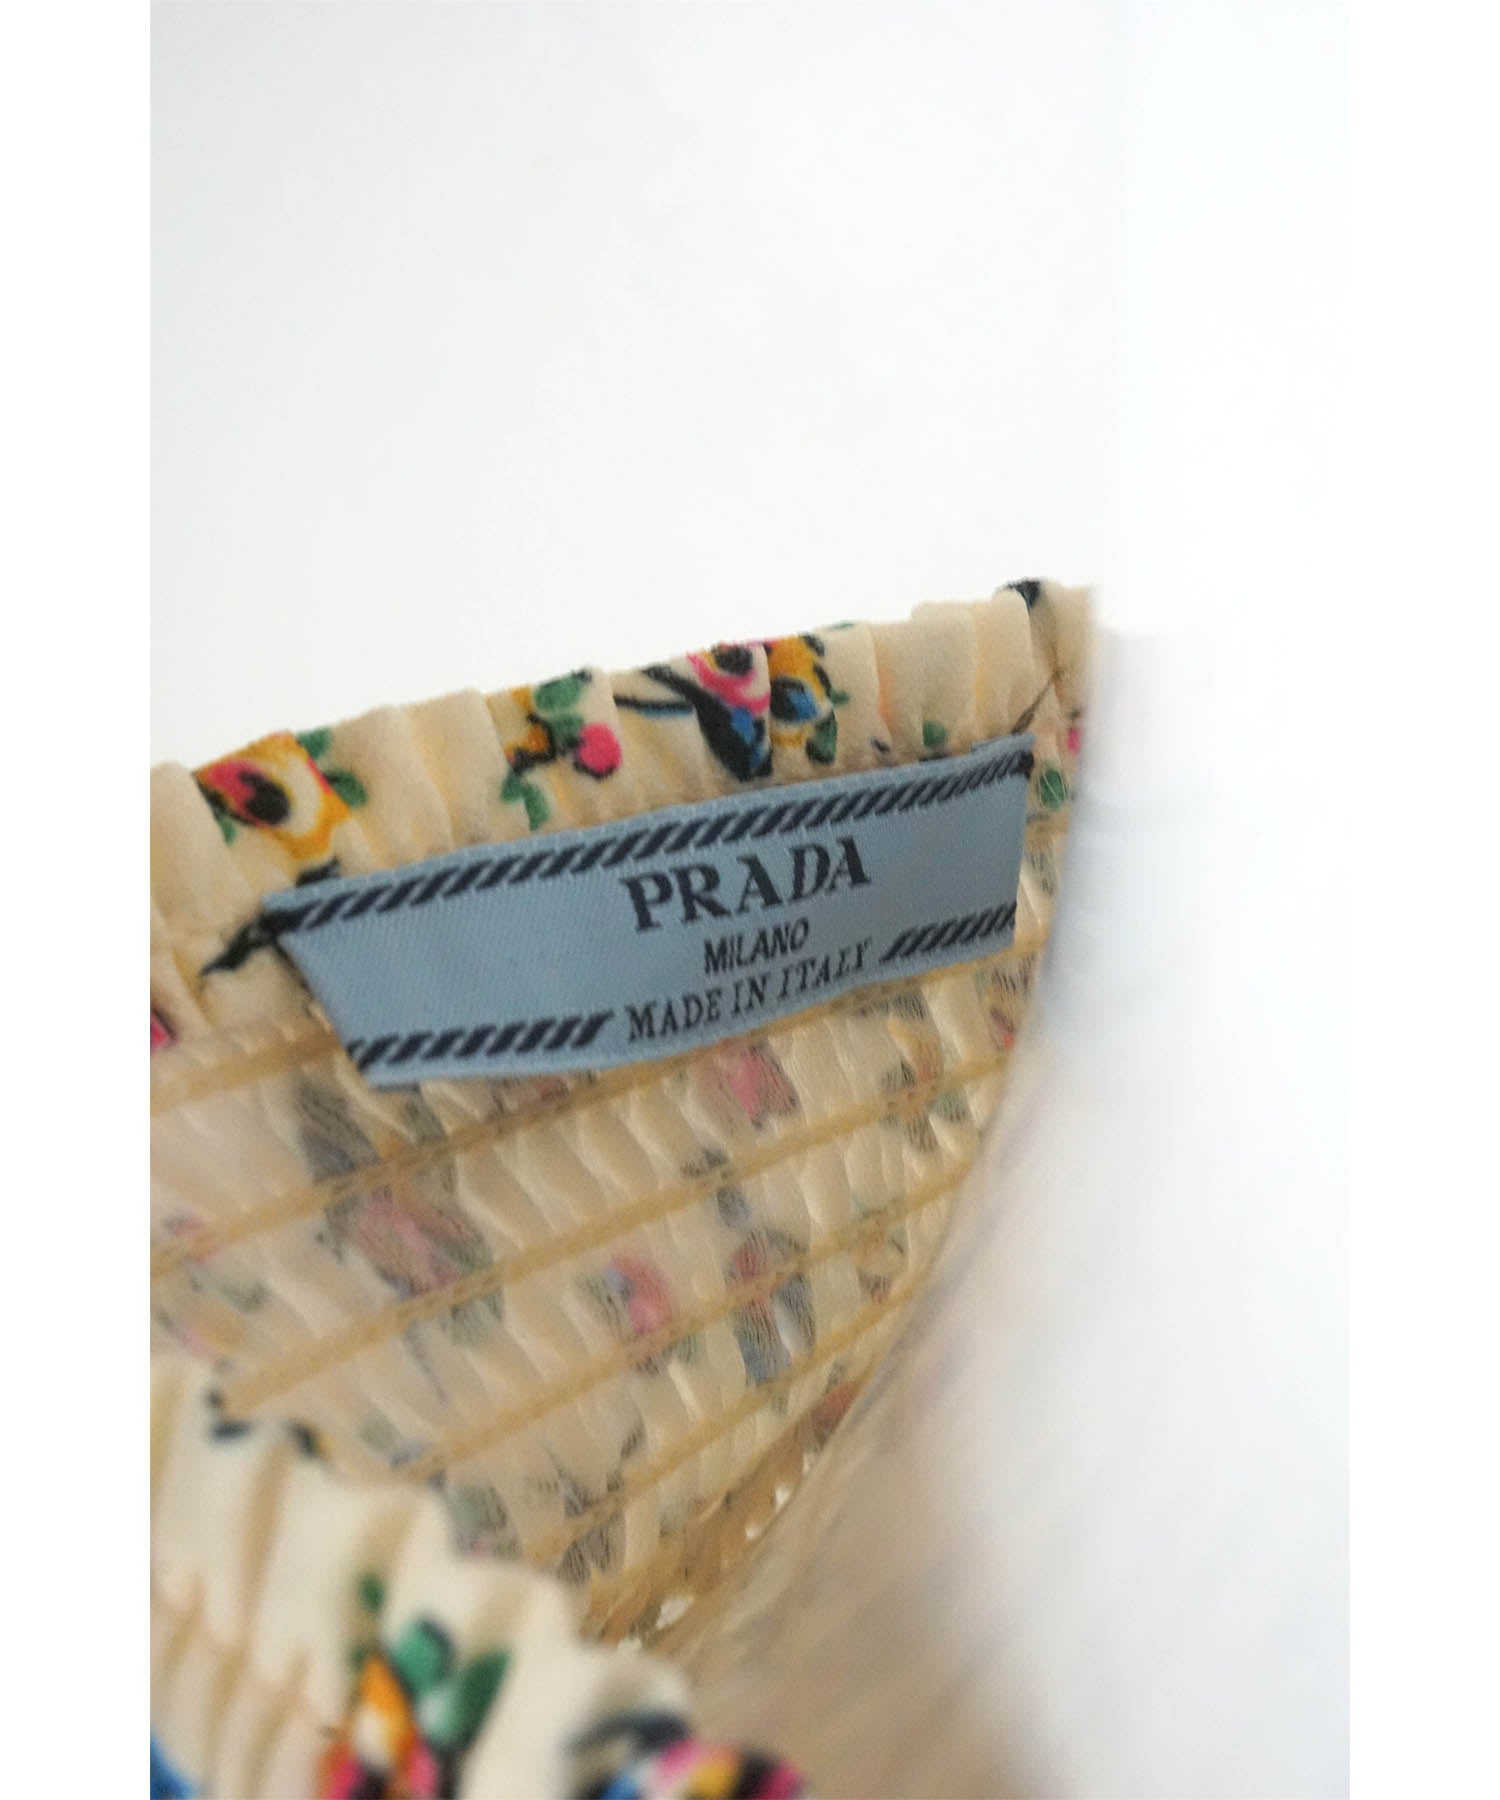 Prada Bird & Floral Print Pleated Skirt Size 40